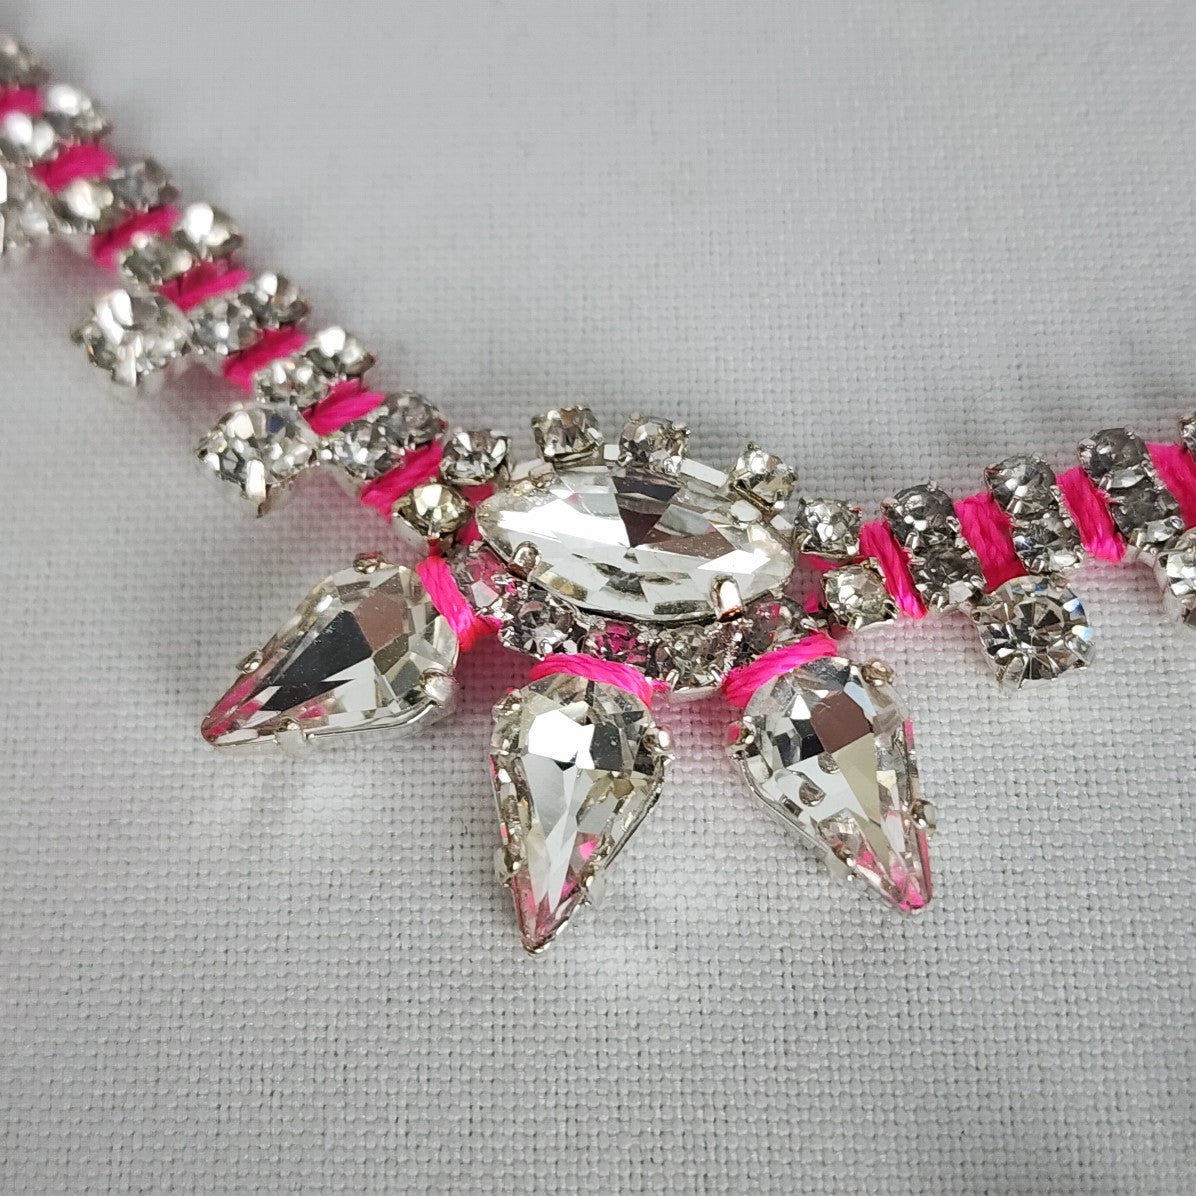 Stella & Dot Pink & Silver Neon Dreams Statement Necklace